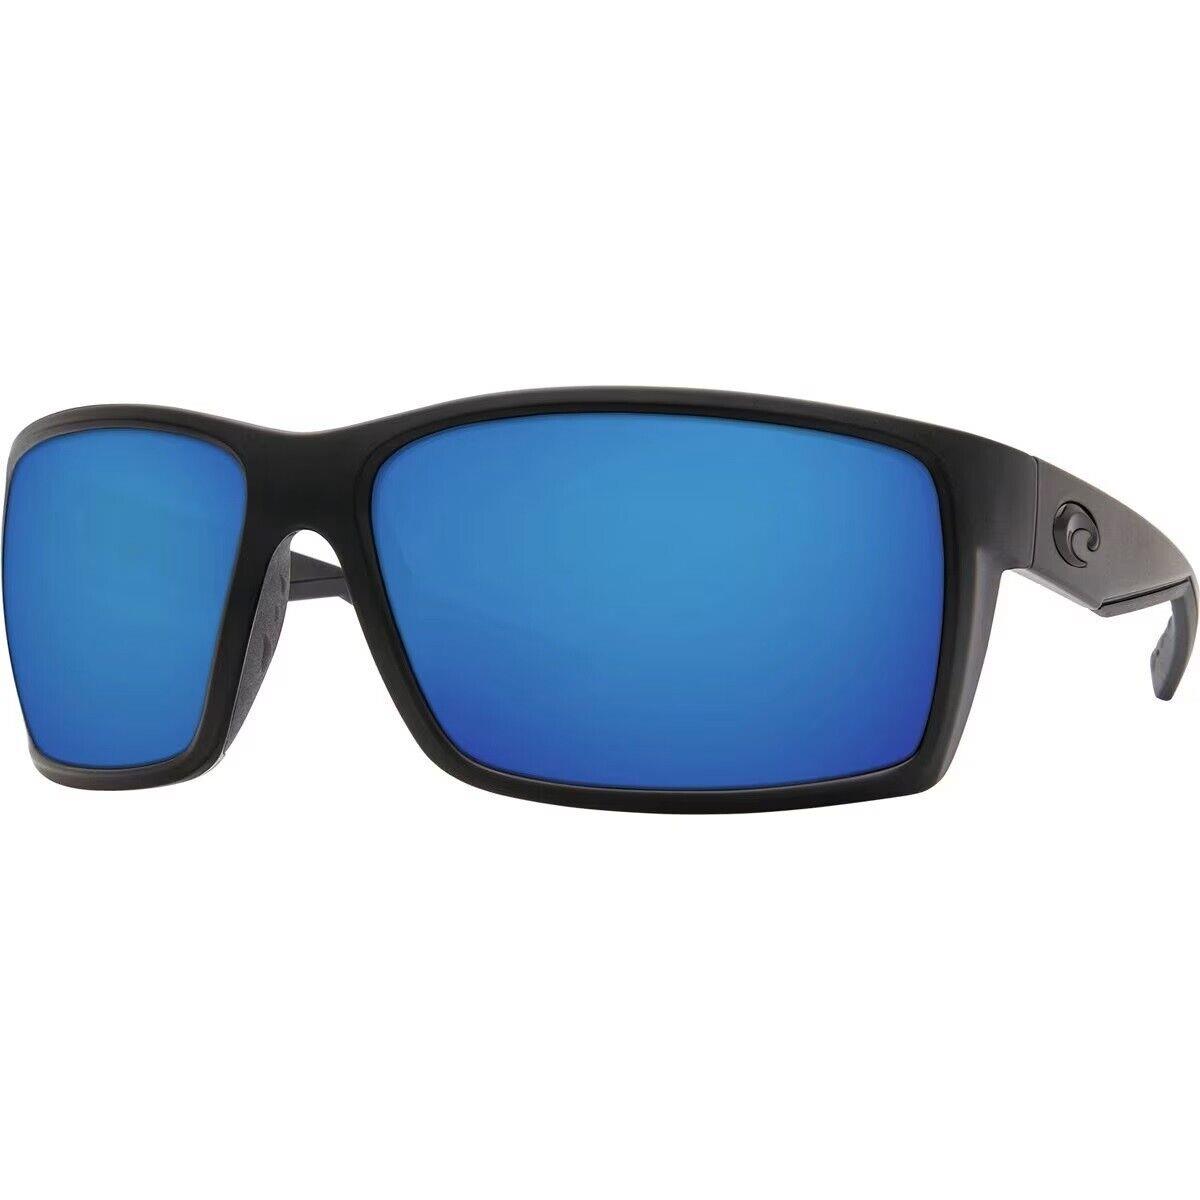 Costa Del Mar Reefton Sunglasses Blackout w/ Blue Mirror Polarized Glass Lens - Frame: Black, Lens: Blue